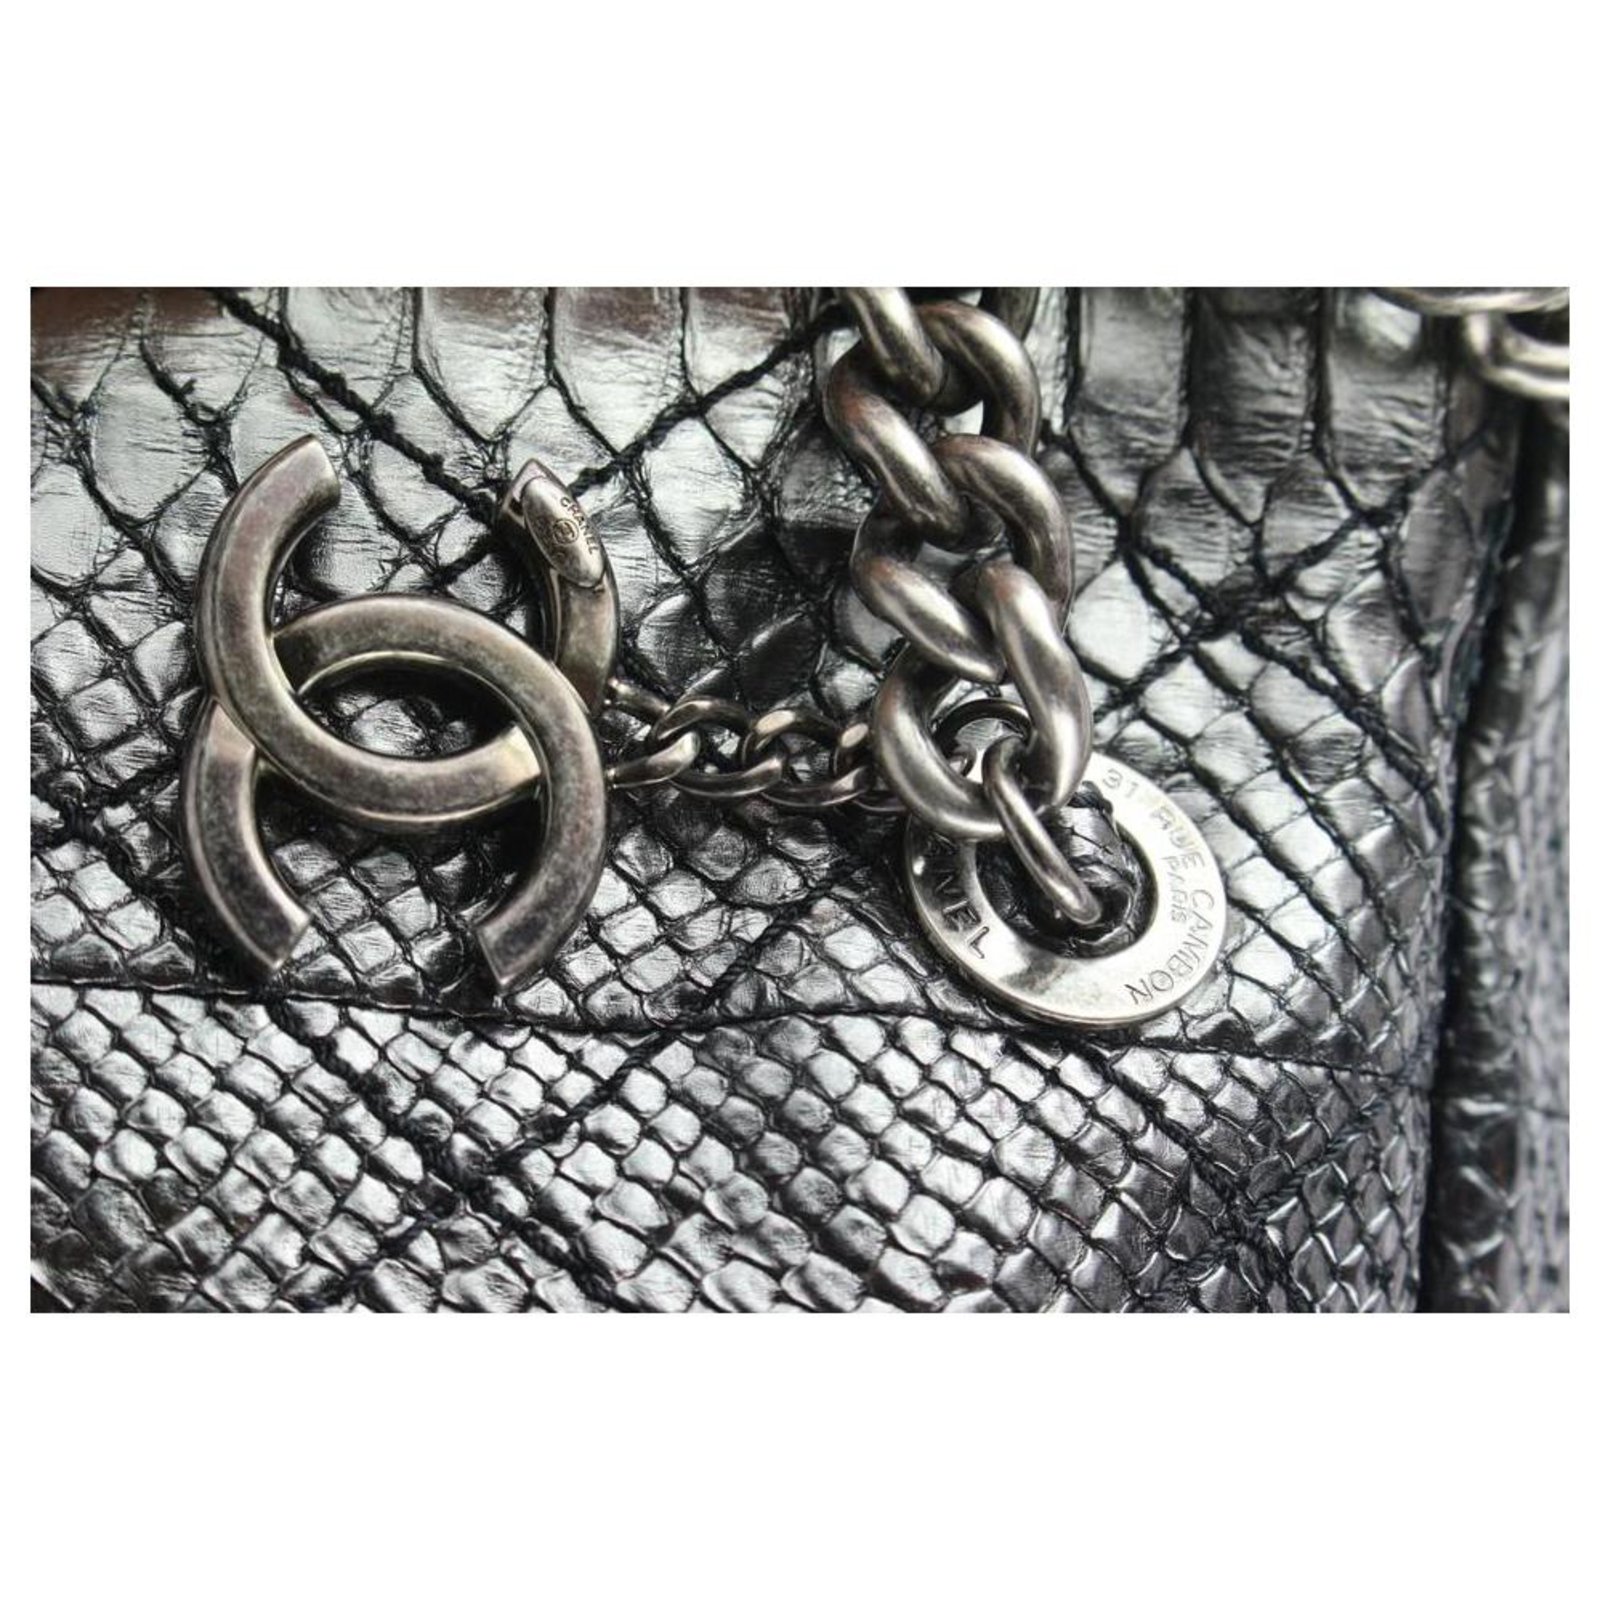 Chanel Classic Iridescent Python Medium Double Flap Bag - ShopStyle